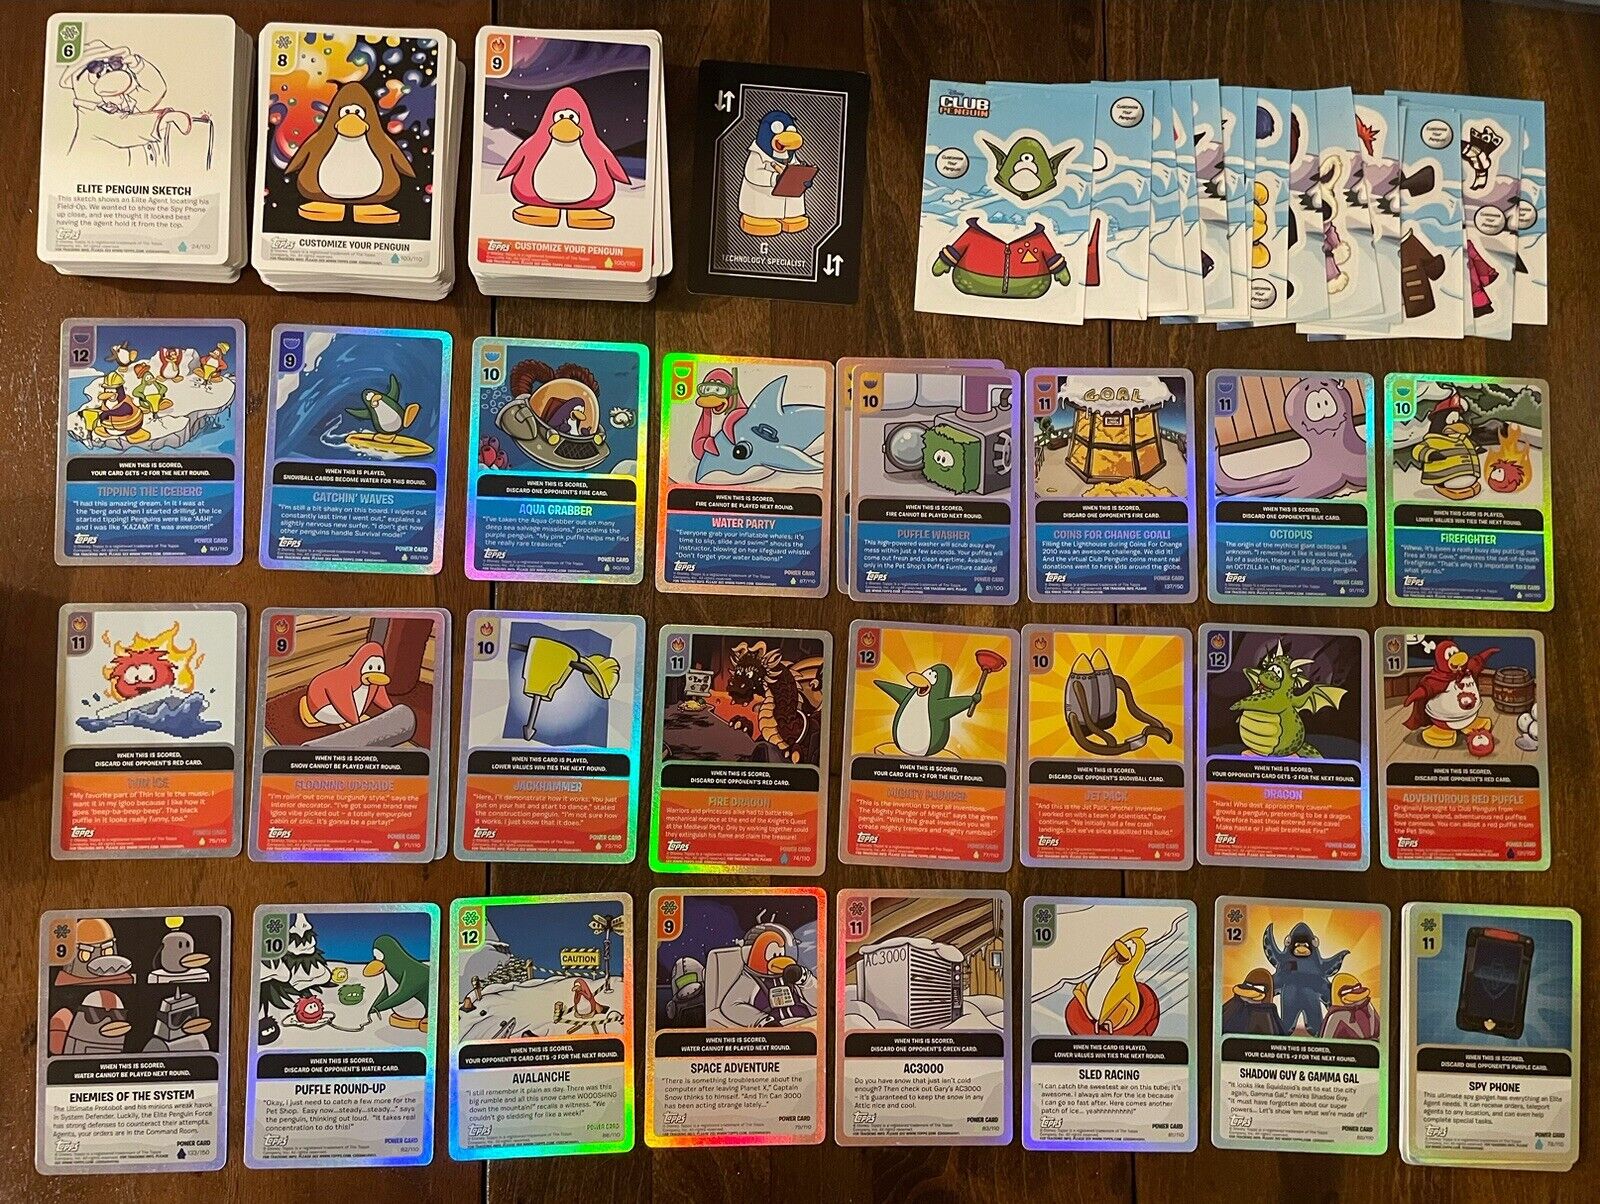 198 Disney Club Penguin Card Jitsu Cards- 37 Foils Included (24 Unique Foils)